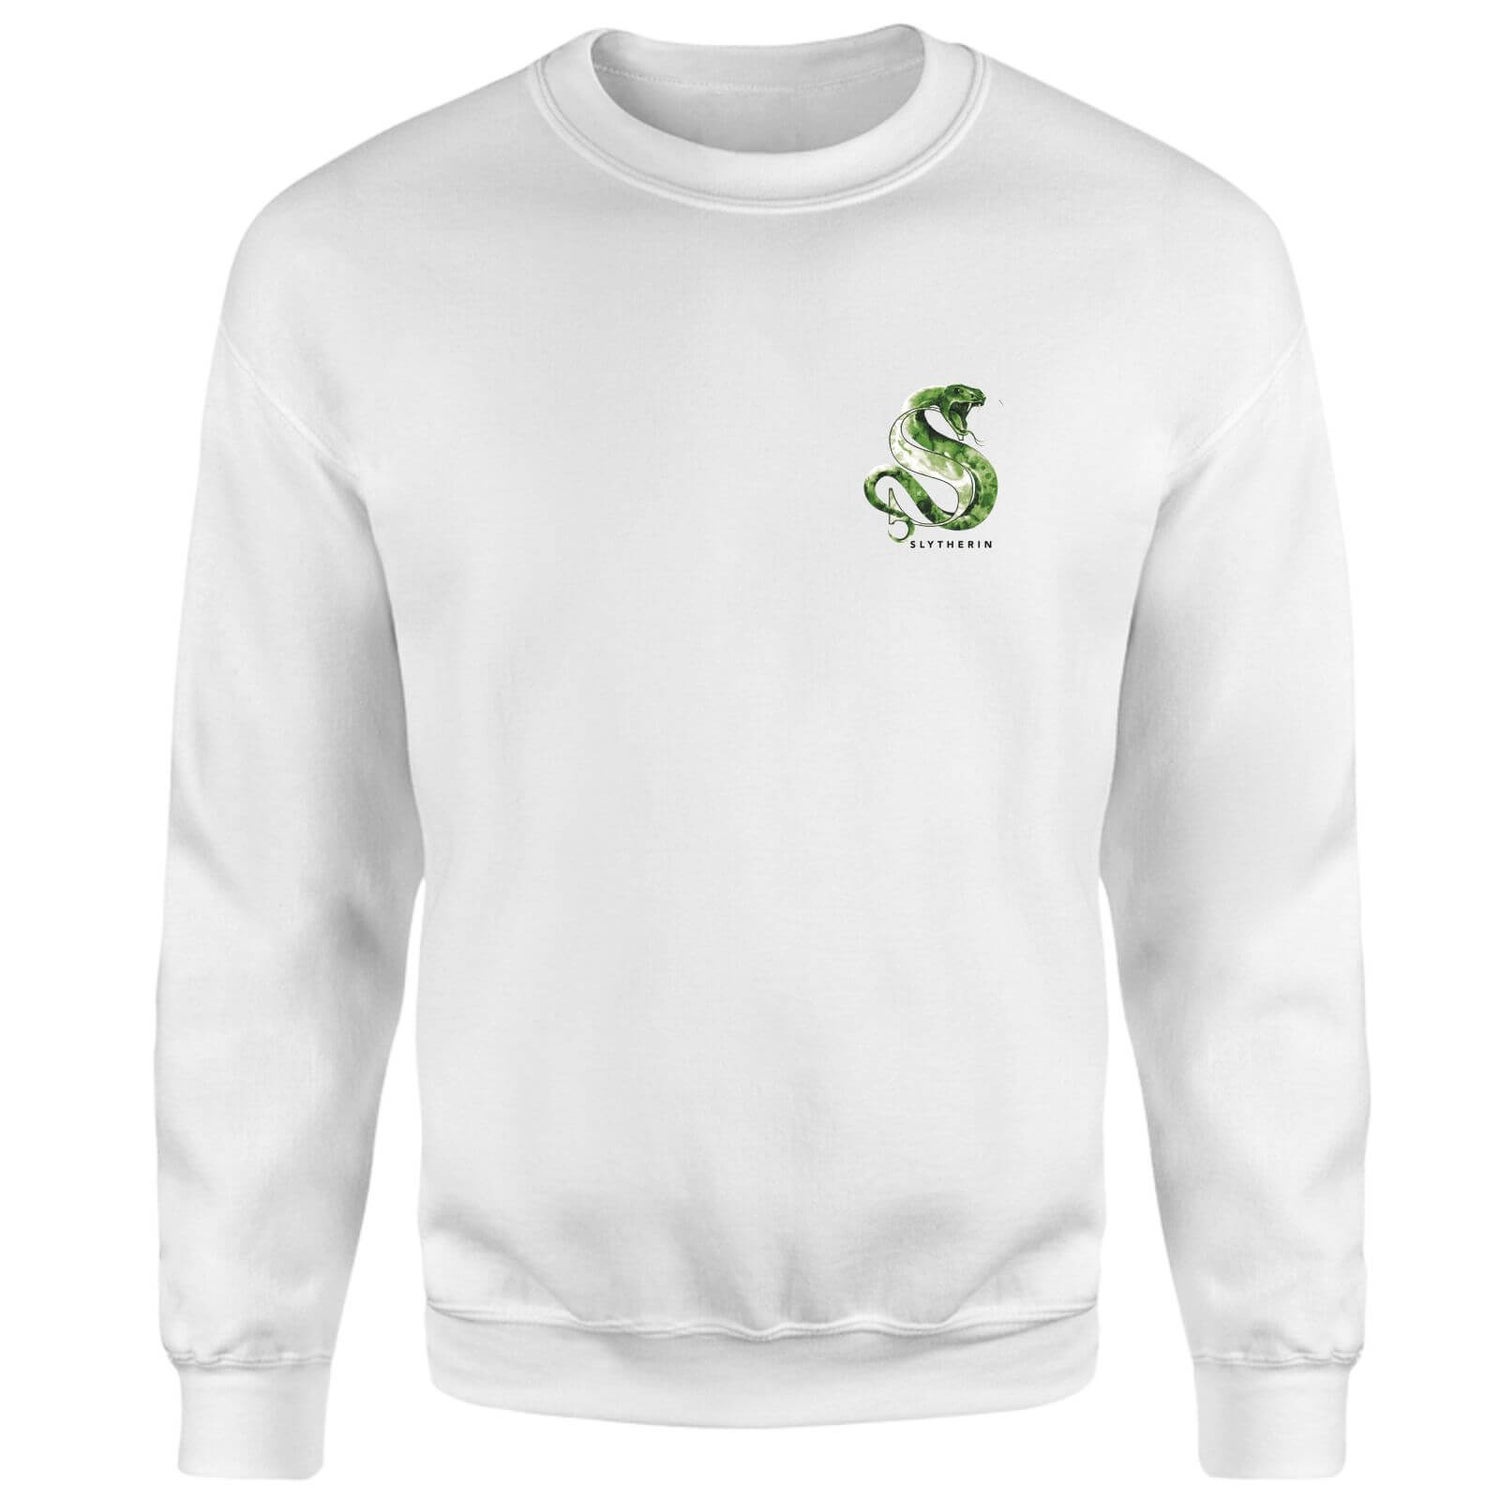 Harry Potter Slytherin Sweatshirt - White